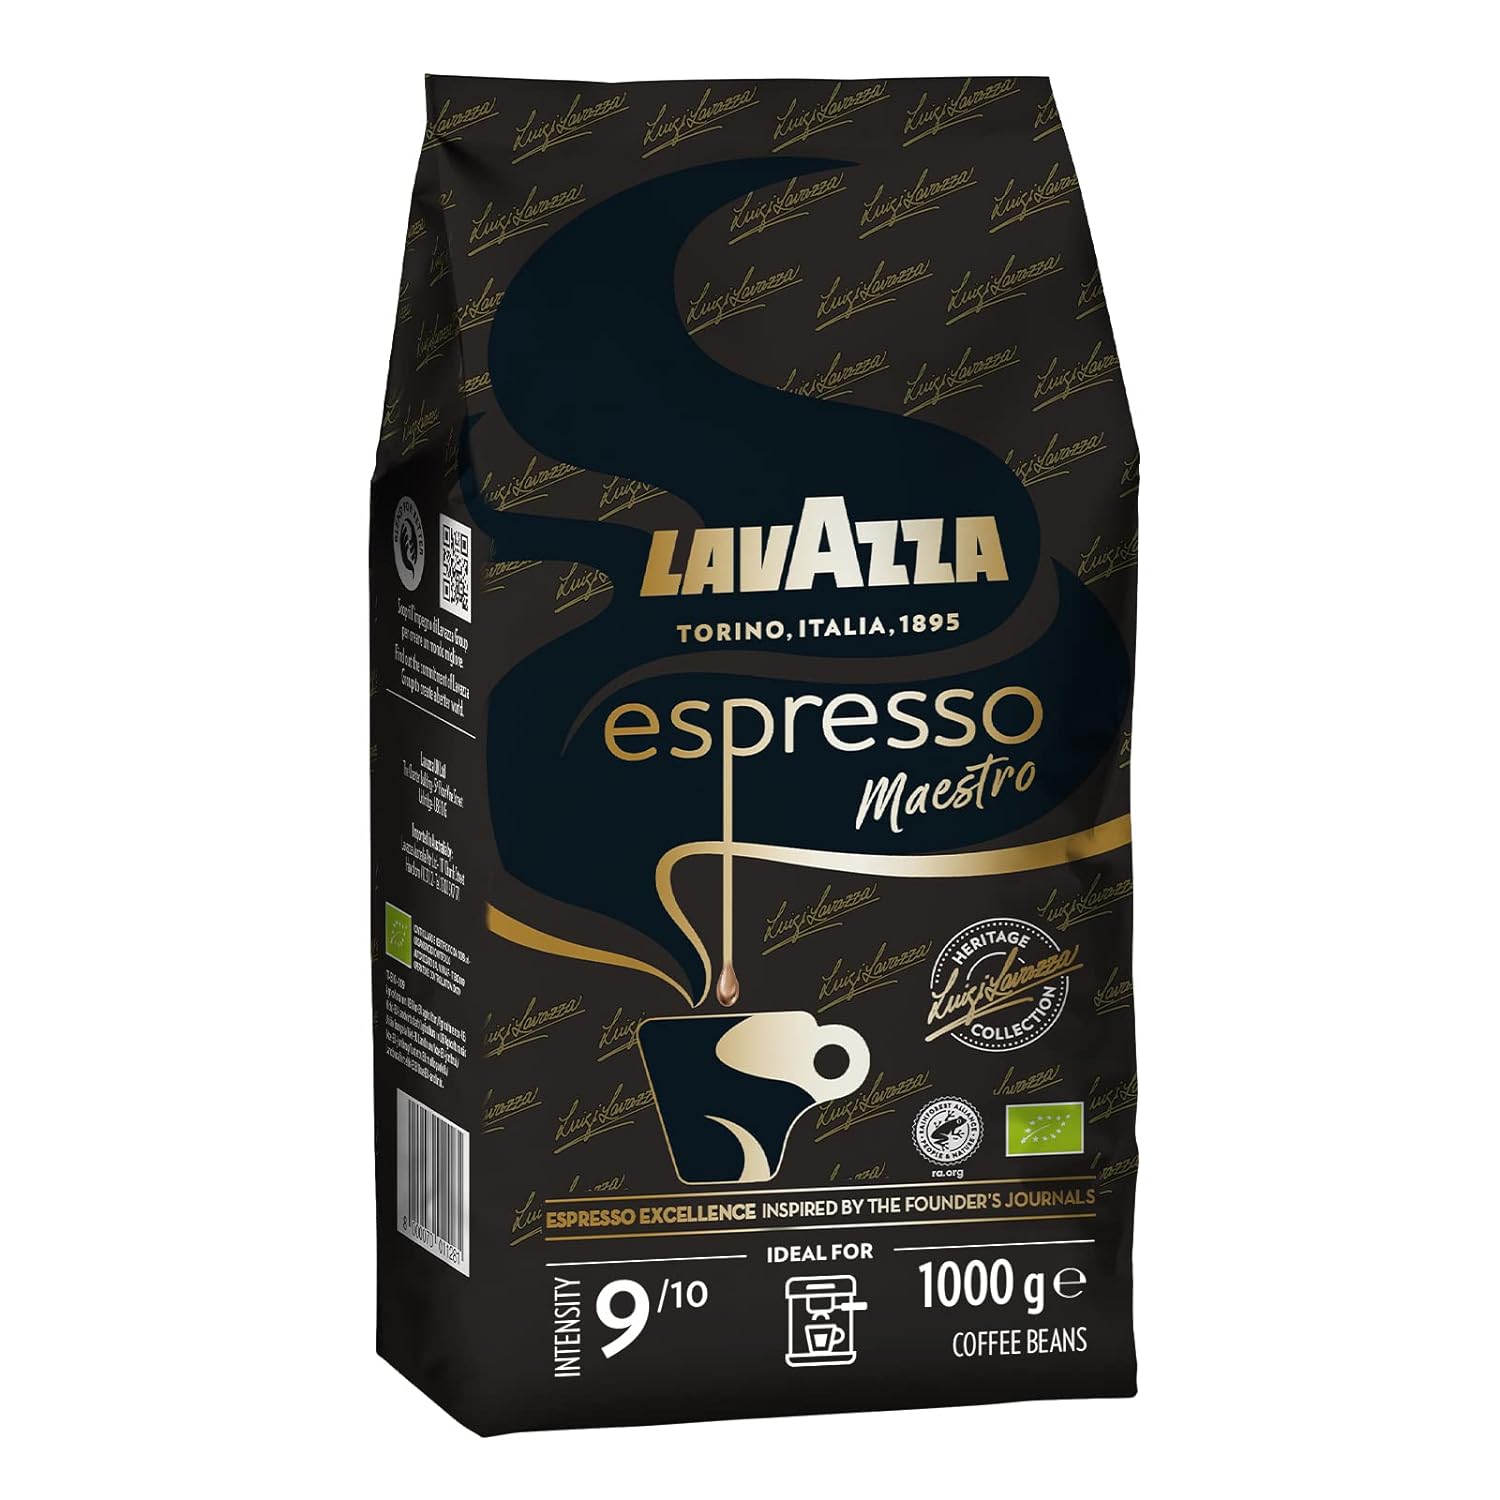 Lavazza, espresso maestro, coffee beans for espresso machines, balanced & aromatic fruit and flower taste, intensity 9/10, 100 % organic Arabica & Robusta, slow & gentle roasting, 1 kg